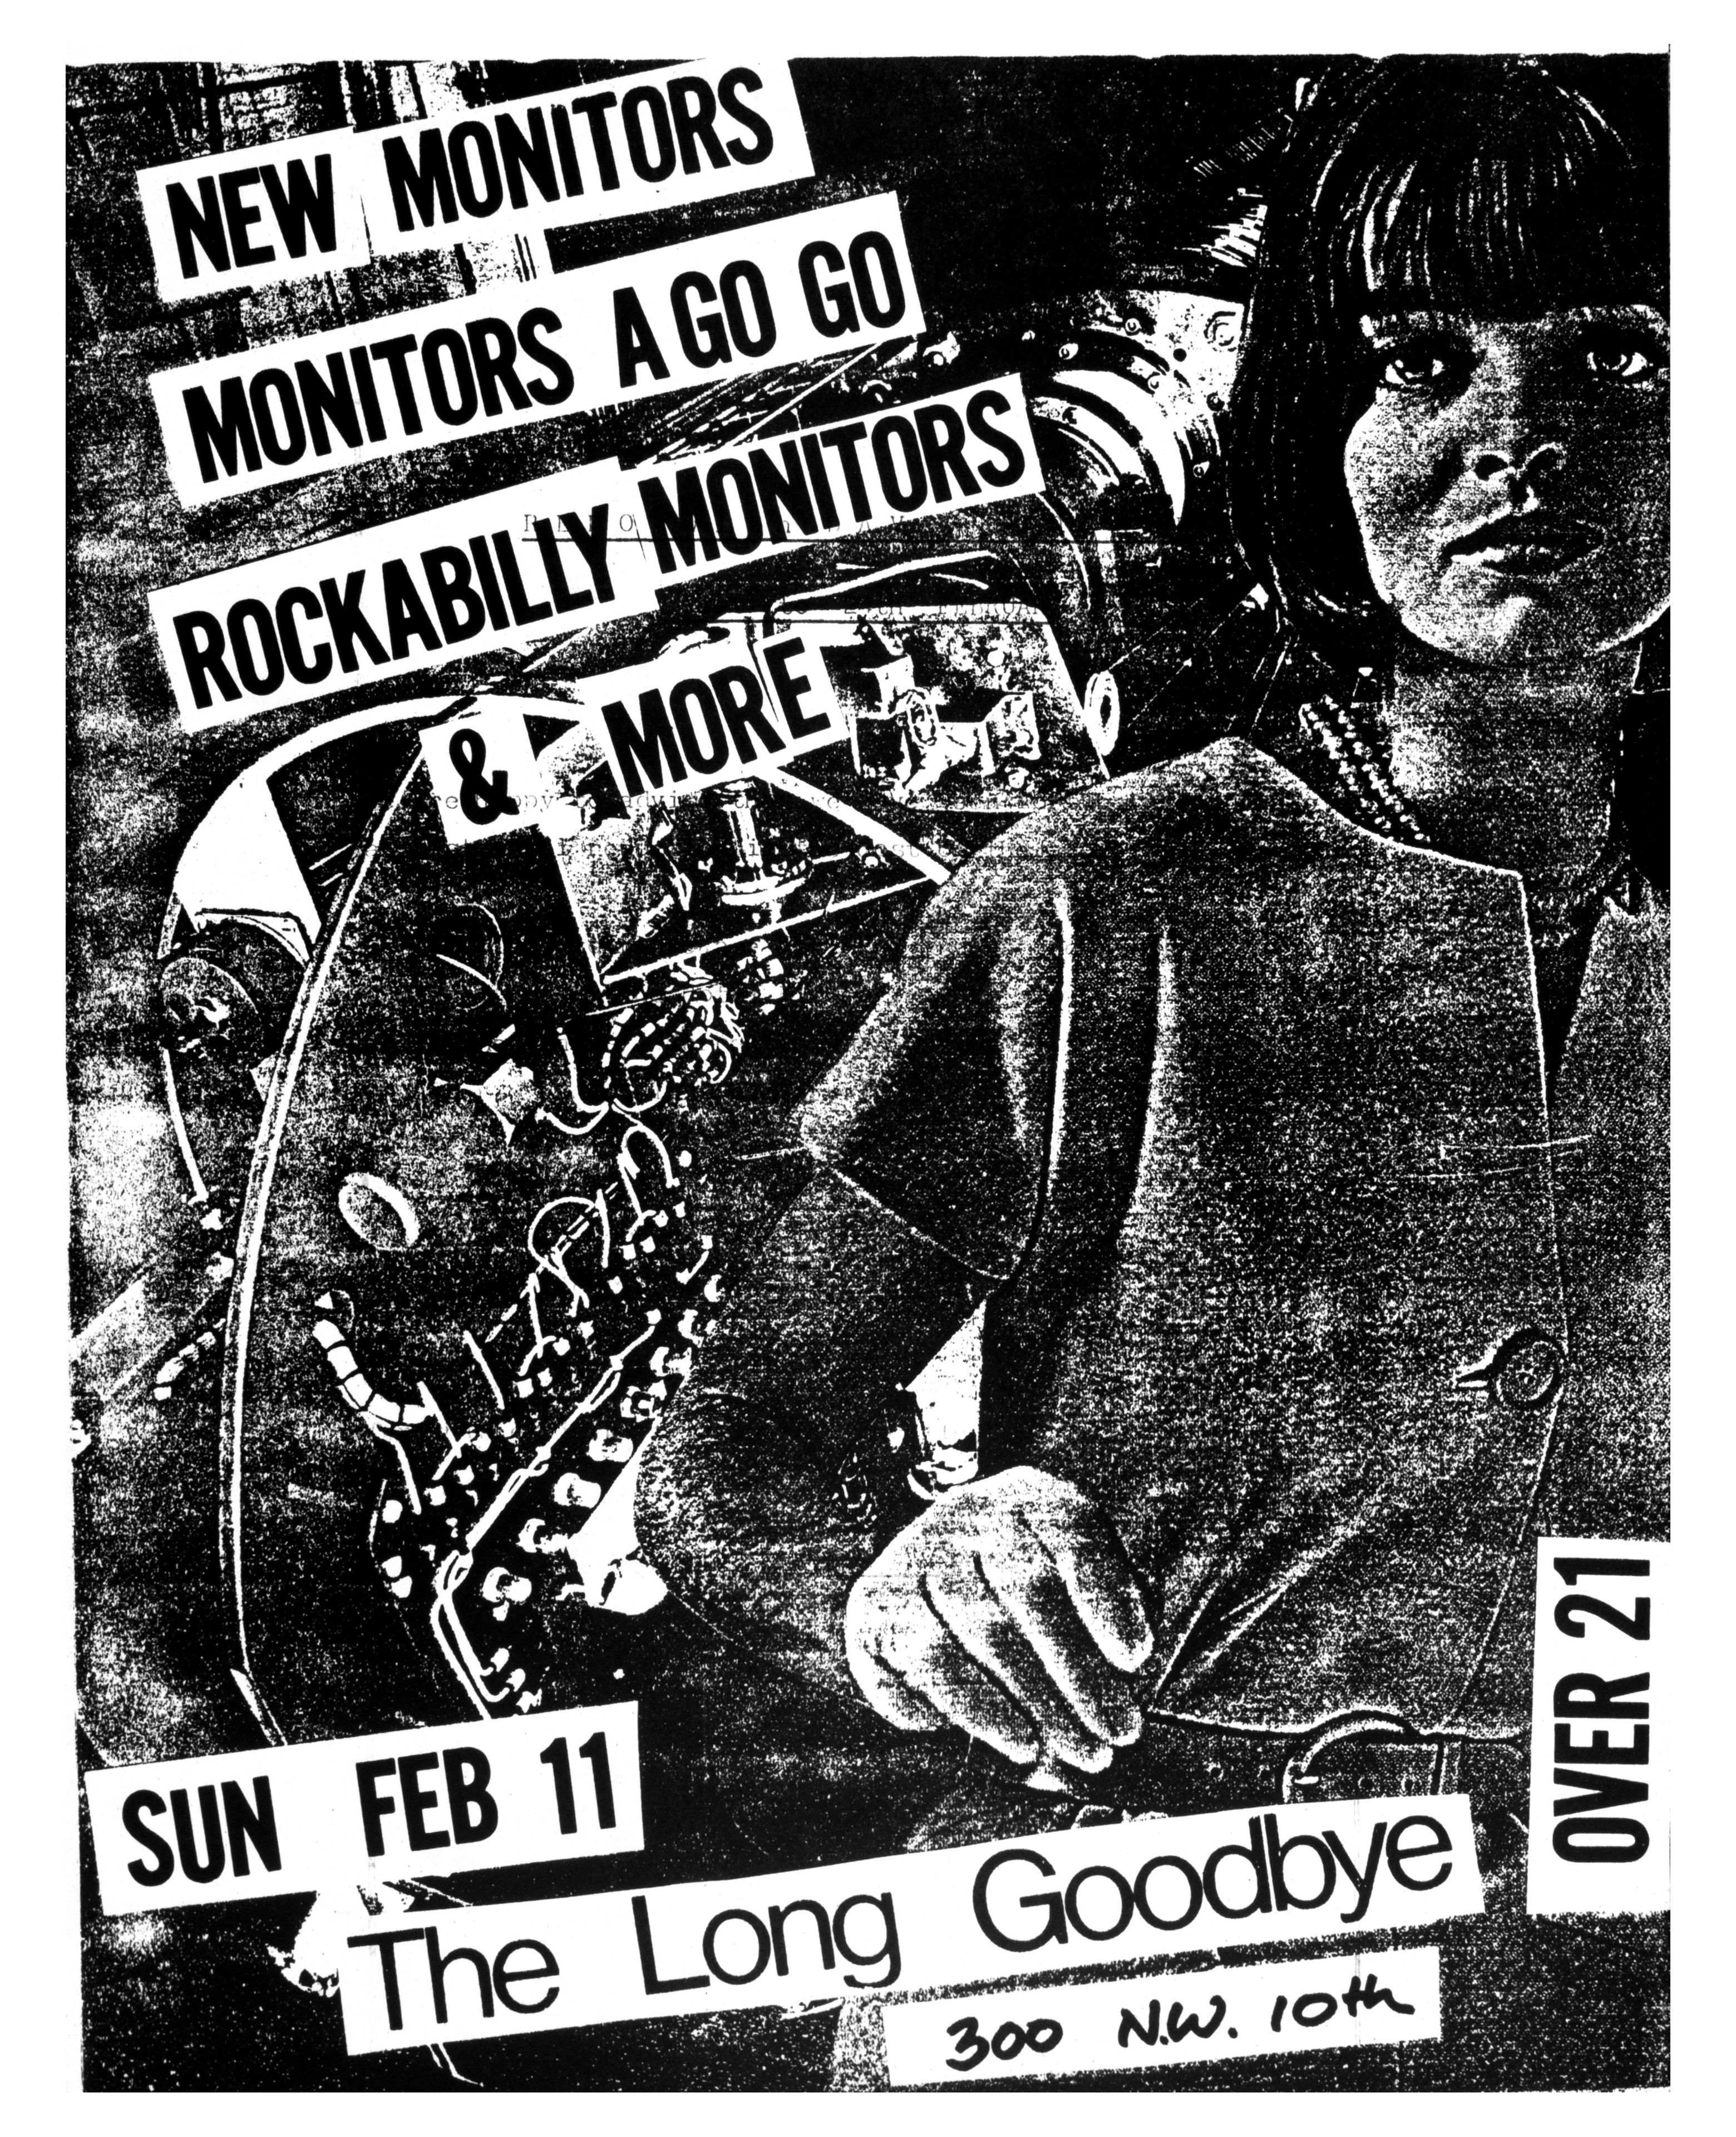 MXP-43.1 New Monitors 1979 Long Goodbye  Feb 11 Concert Poster